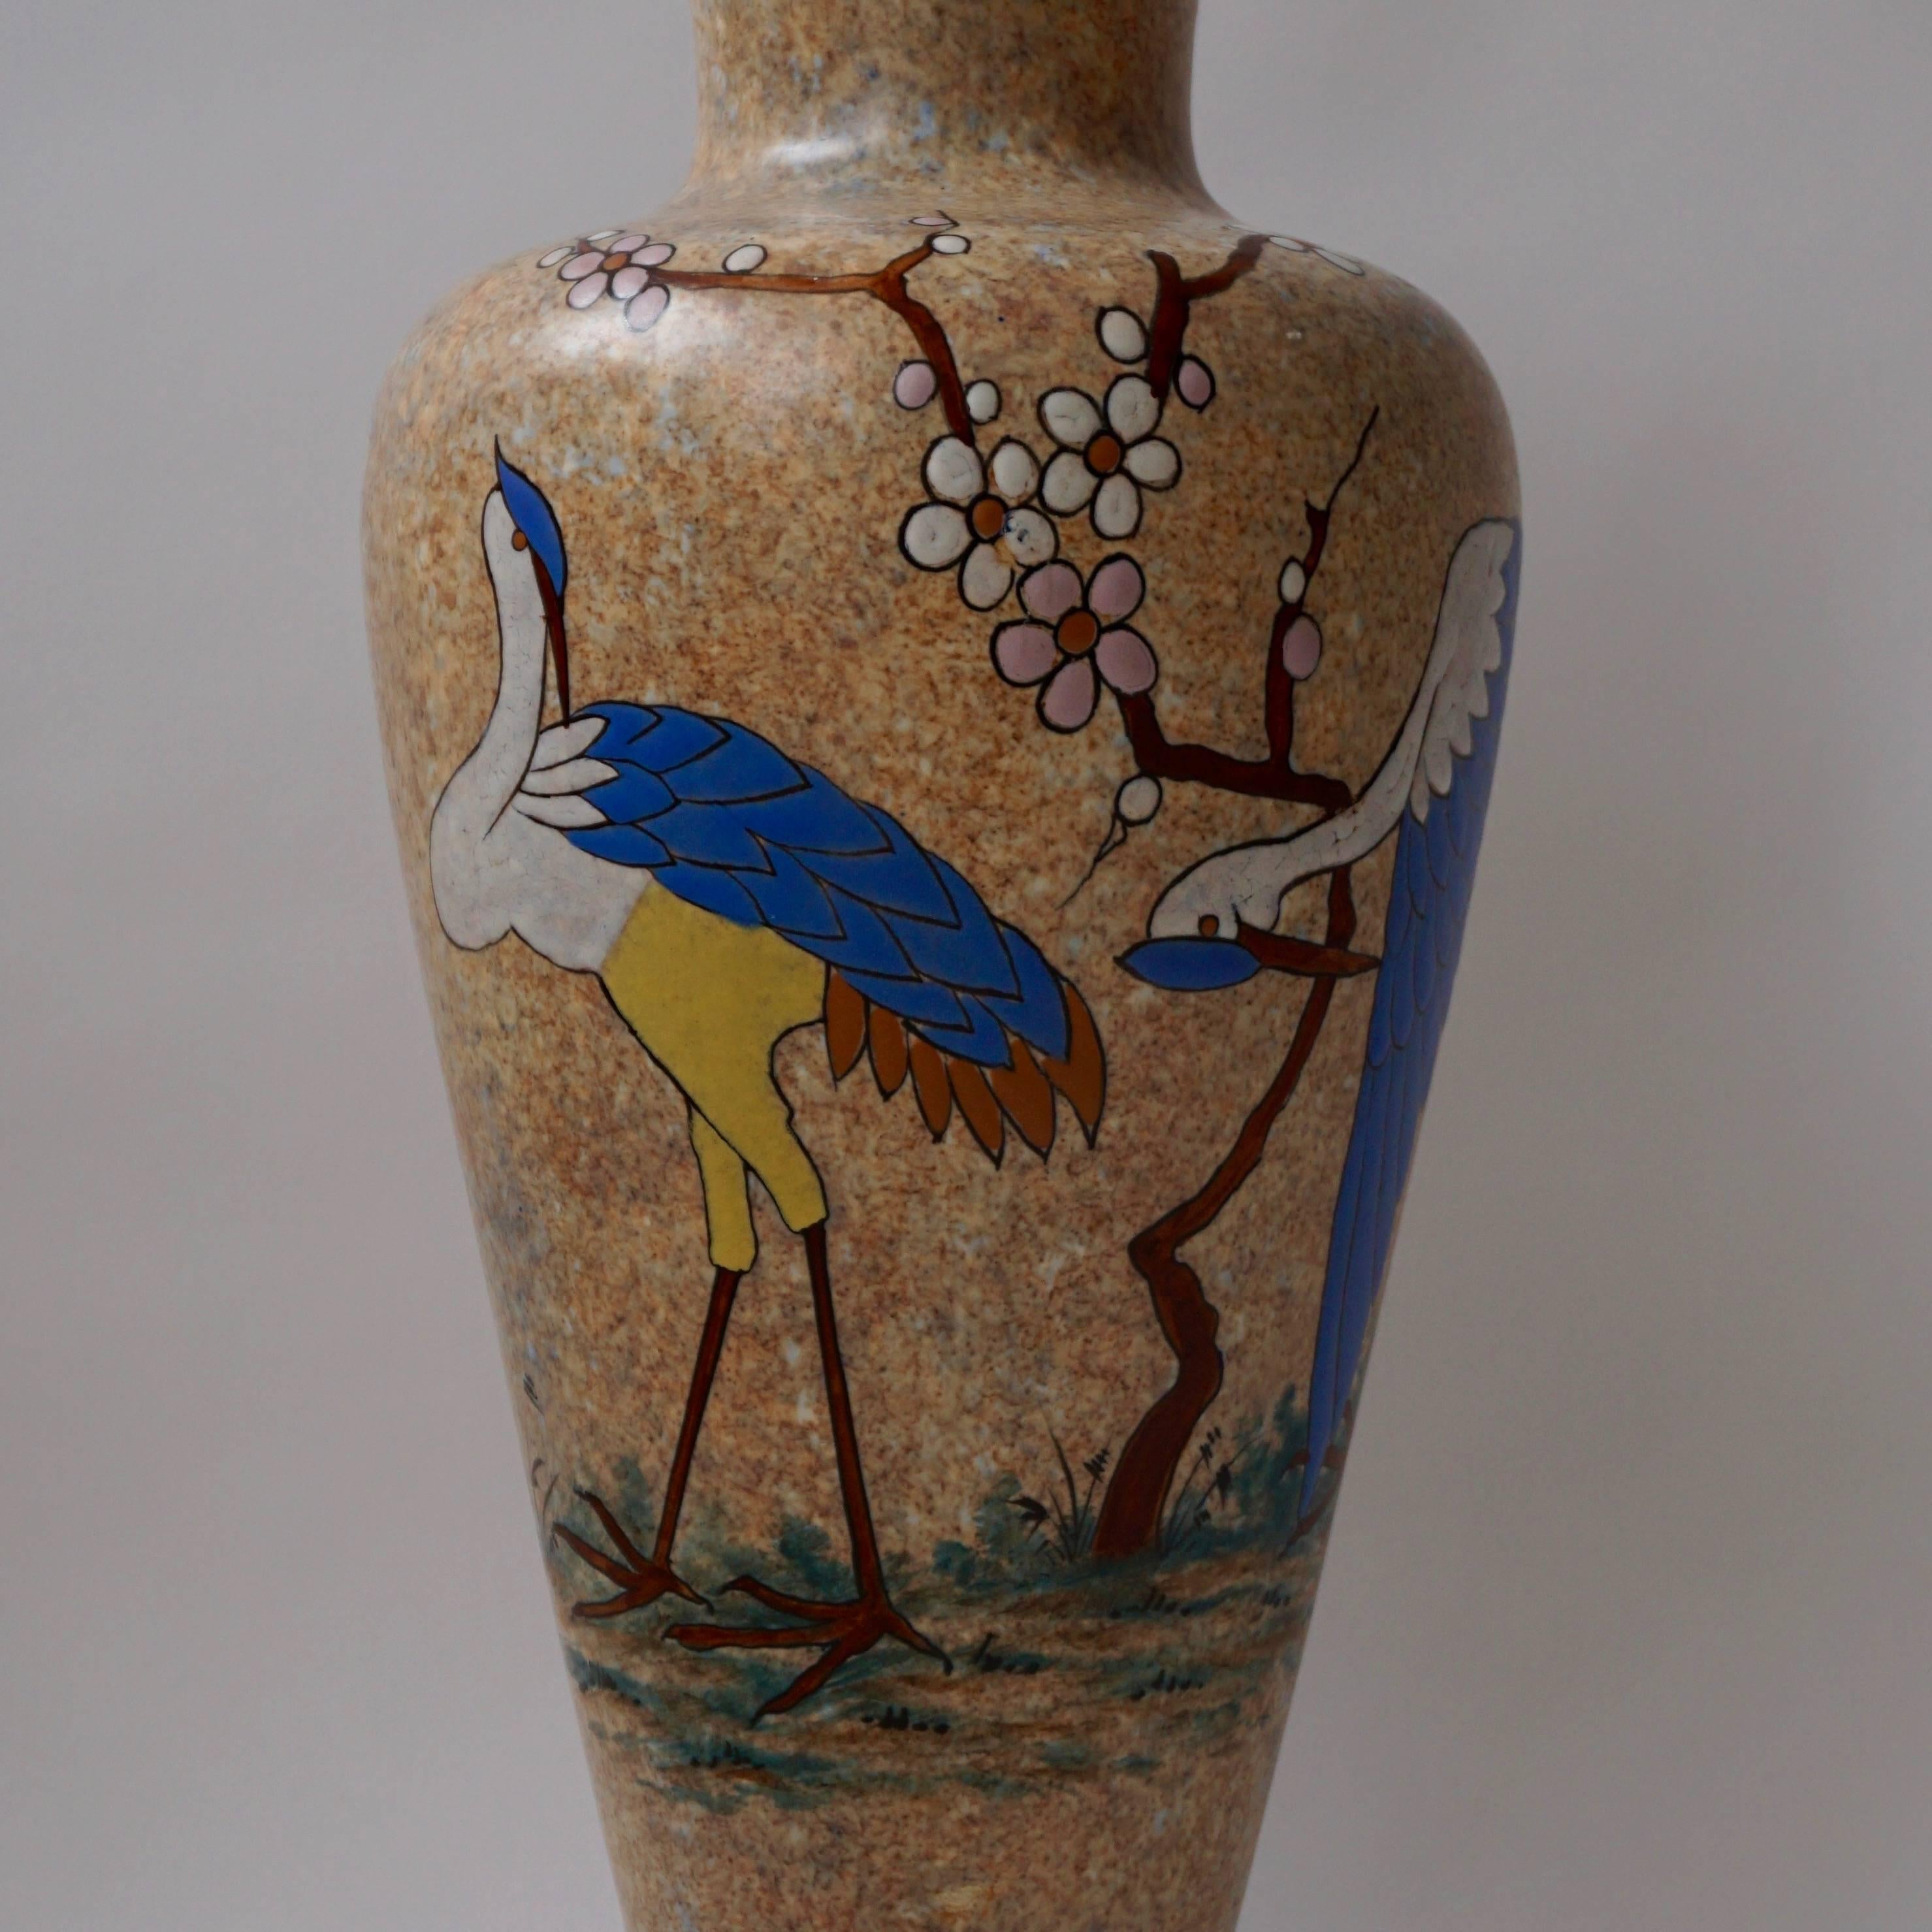 Hand-painted modernist vase, signed by the Belgian artist A. Dubois.
Height:53 cm.
Diameter:20 cm.